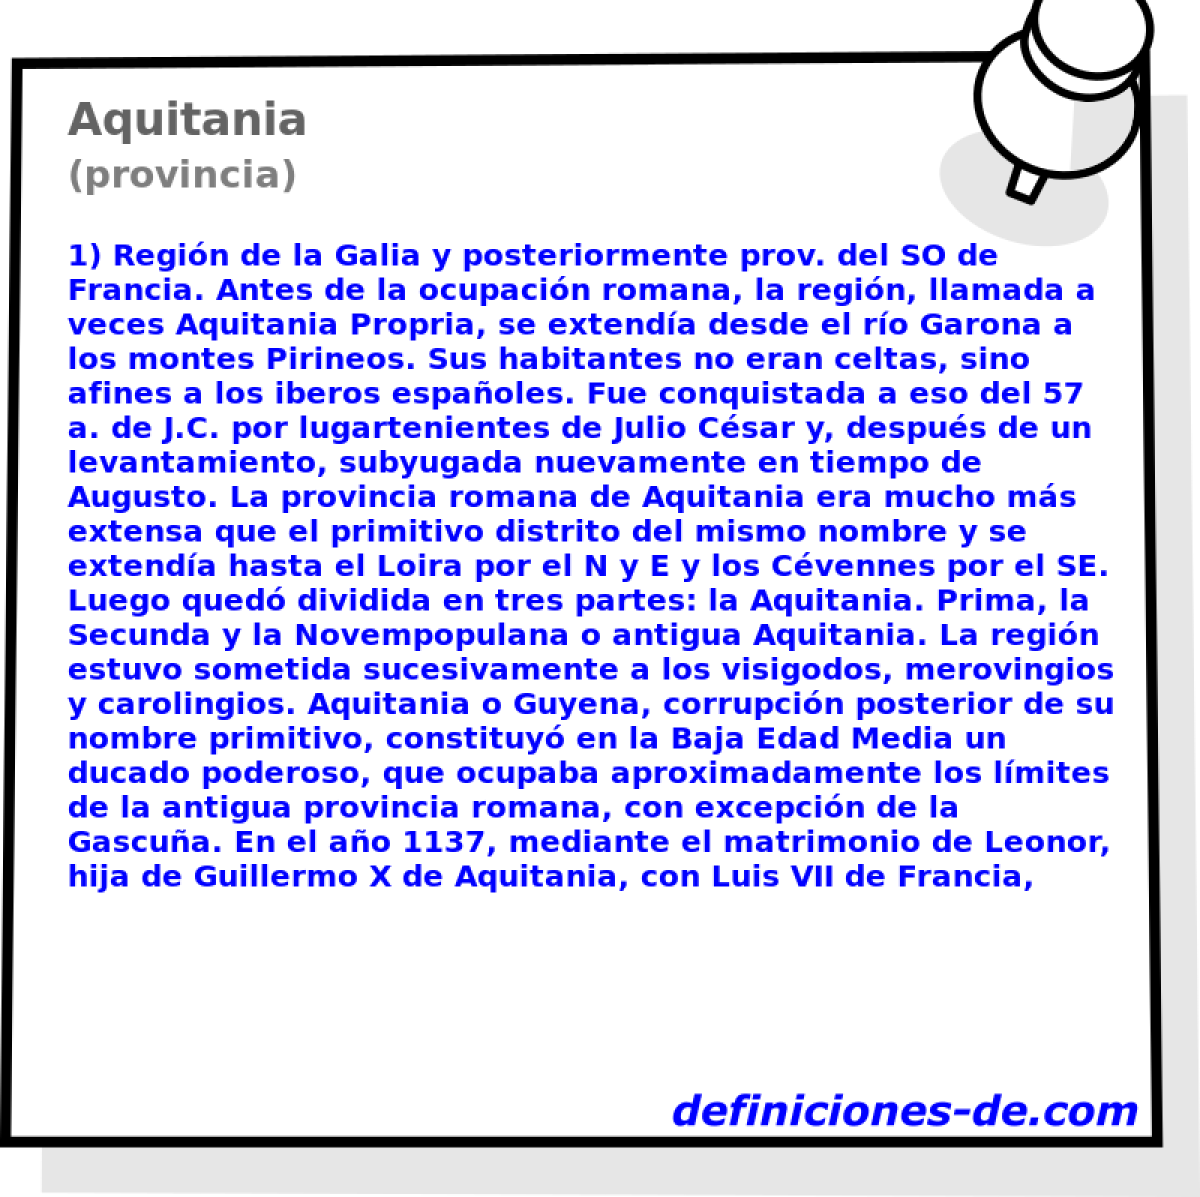 Aquitania (provincia)